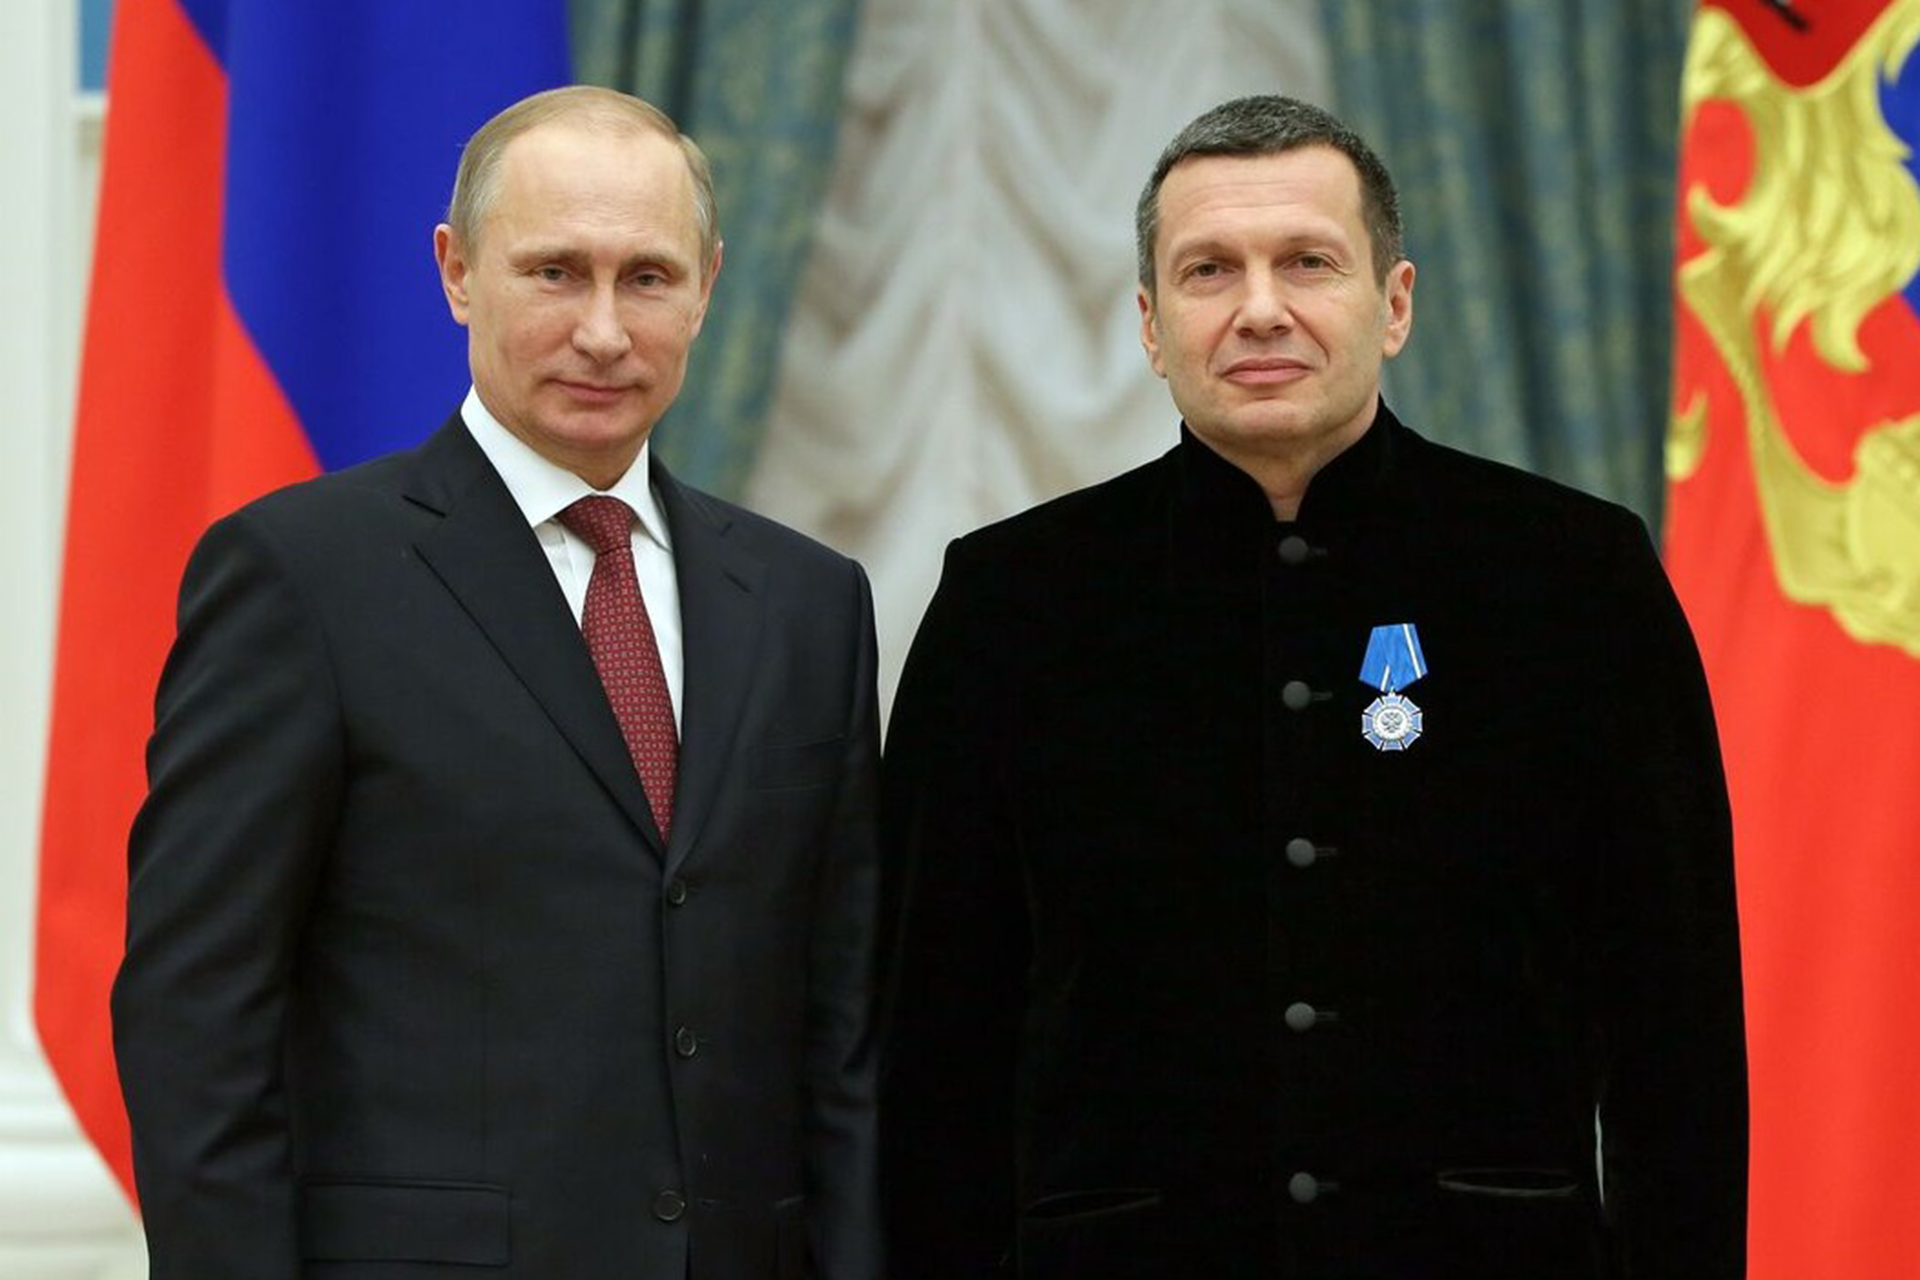 Bild: Kremlin.ru, Vladimir Rudol'fovich Solovyov and Vladimir Putin, CC BY 3.0, via Wikimedia Commons (Bildgröße geändert)